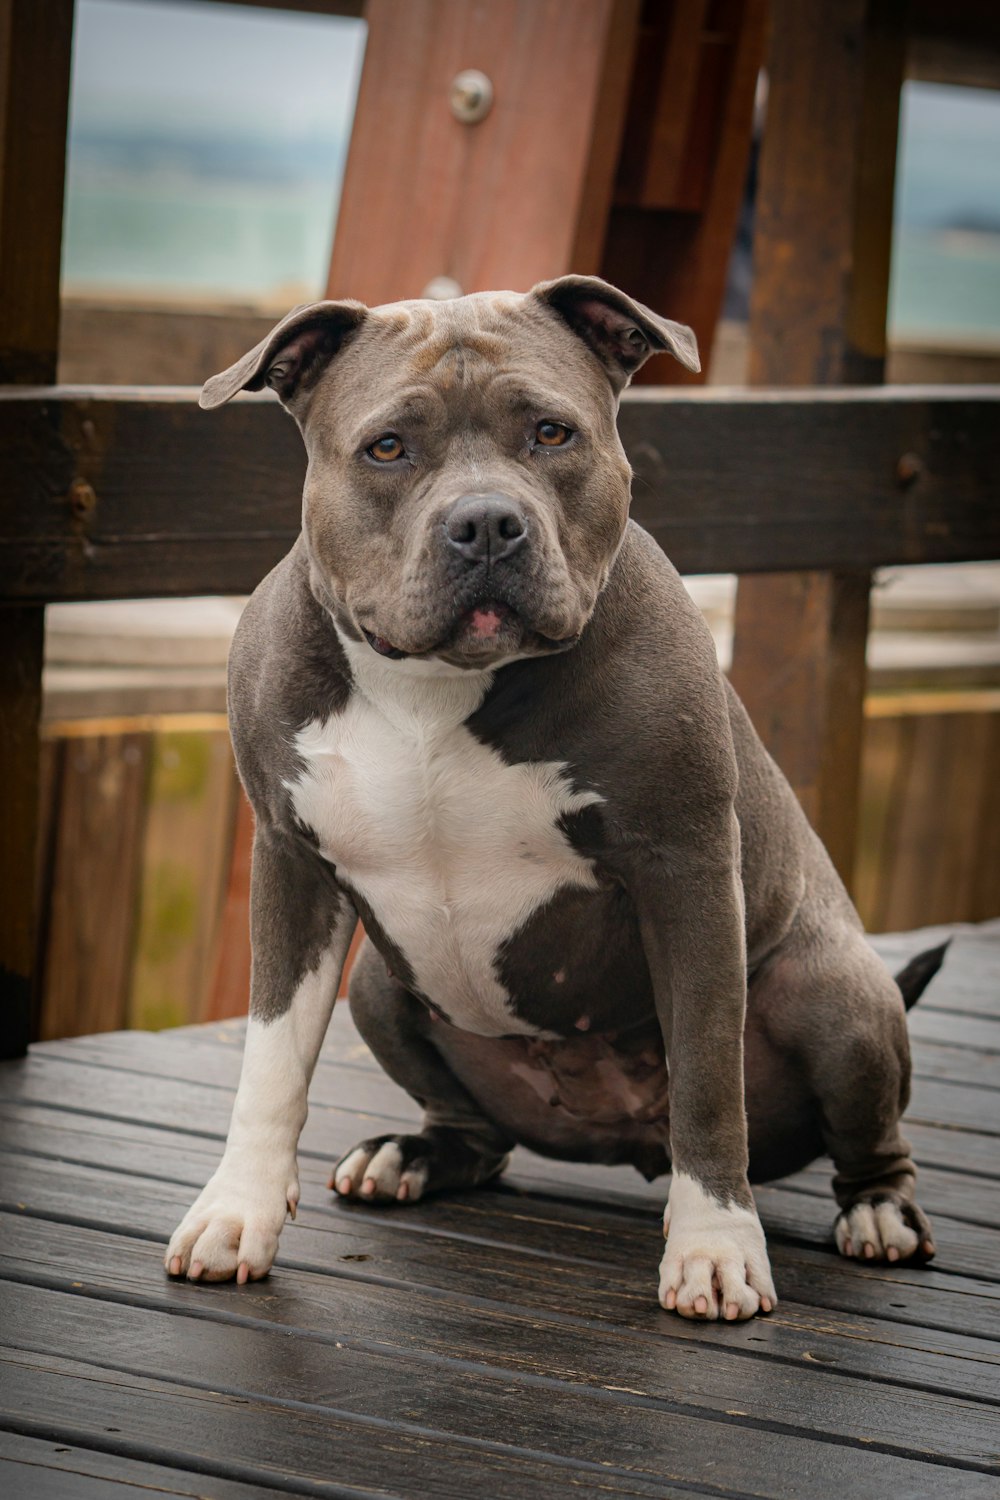 60+ Free Bully Dog & American Bully Images - Pixabay